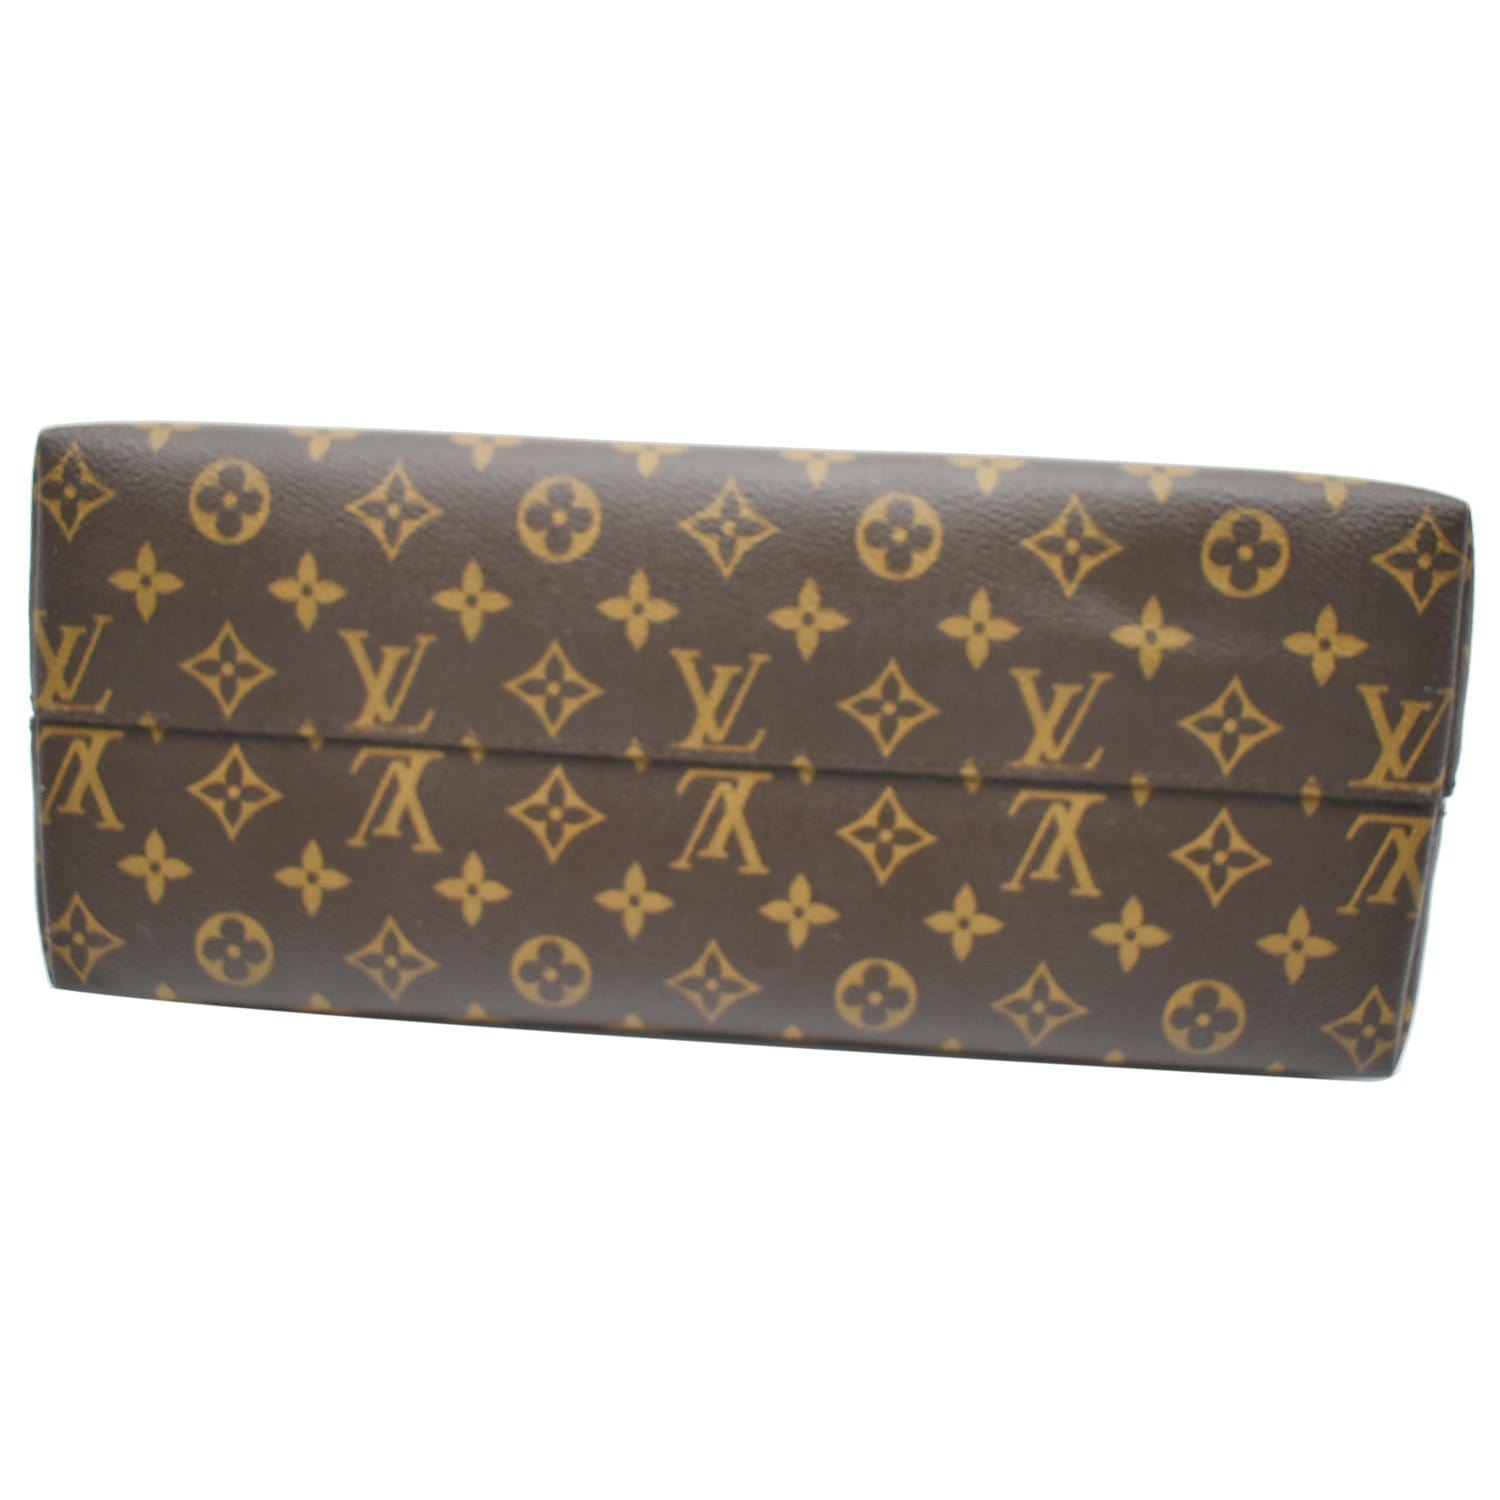 Brown Louis Vuitton Monogram Alma MM Handbag – Designer Revival